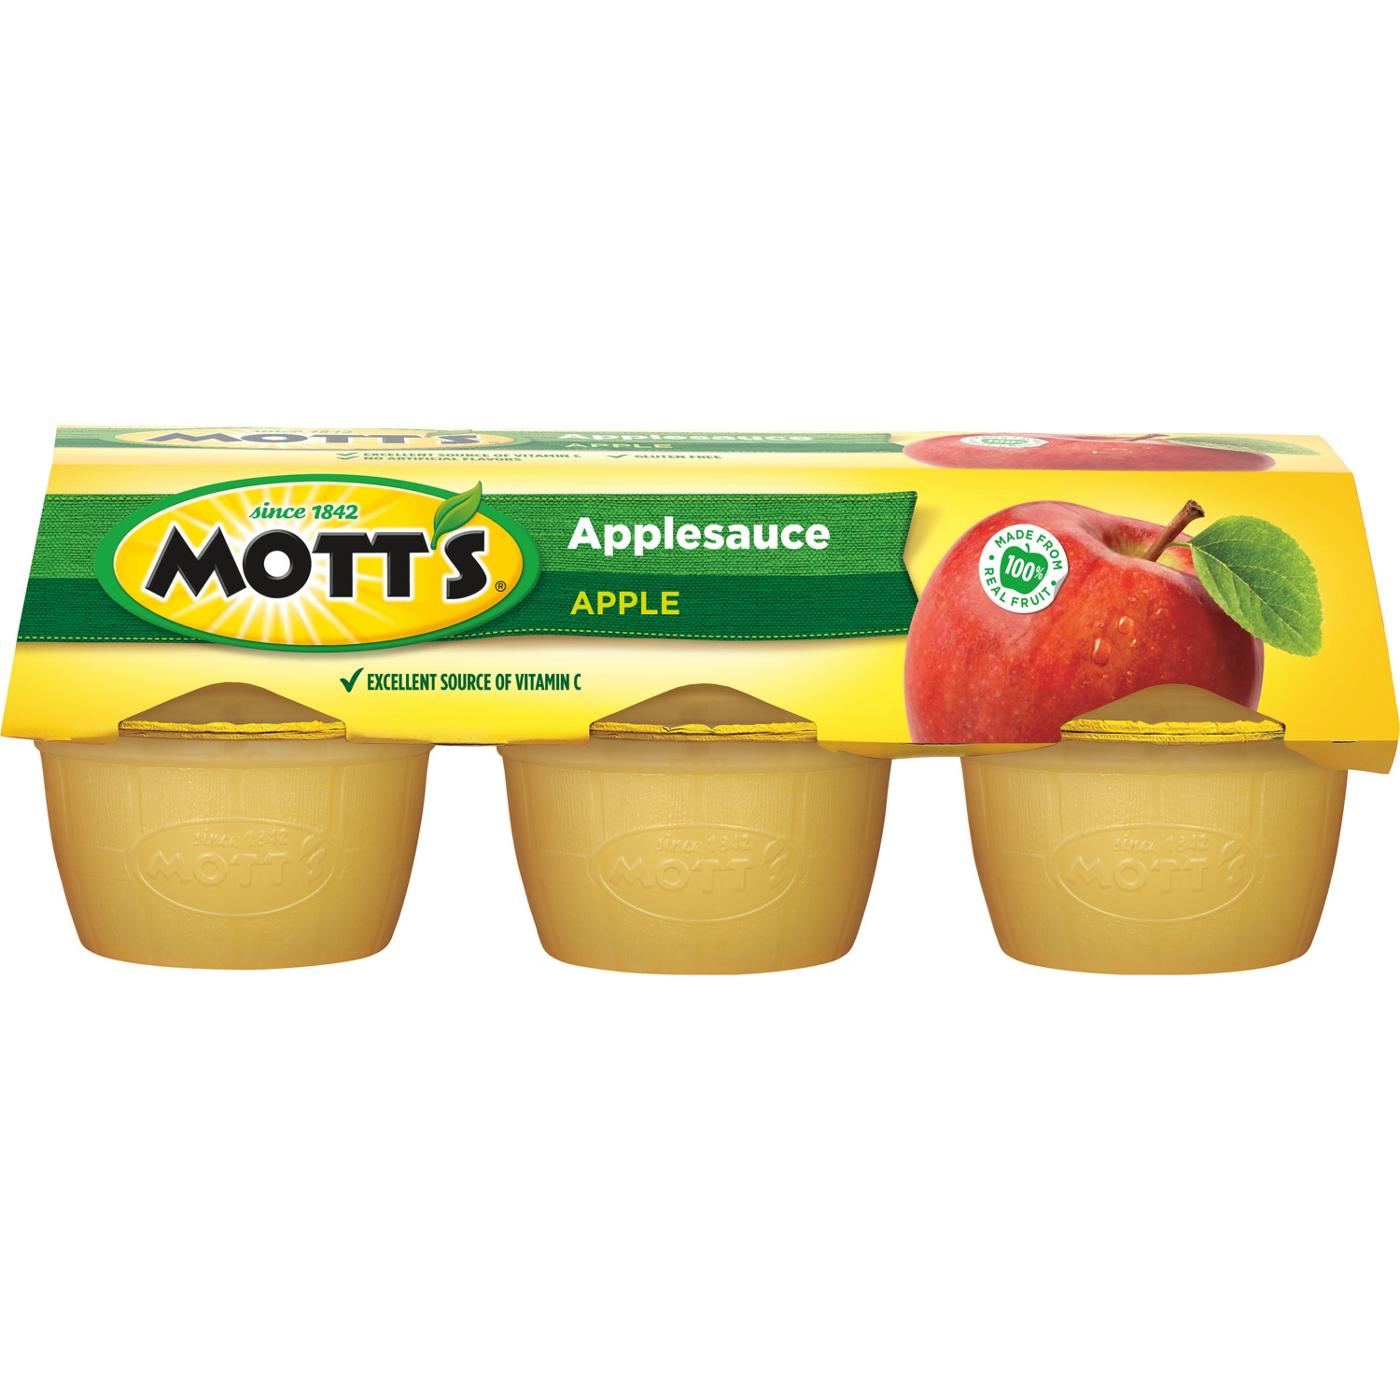 Mott's Original Apple Sauce; image 1 of 7